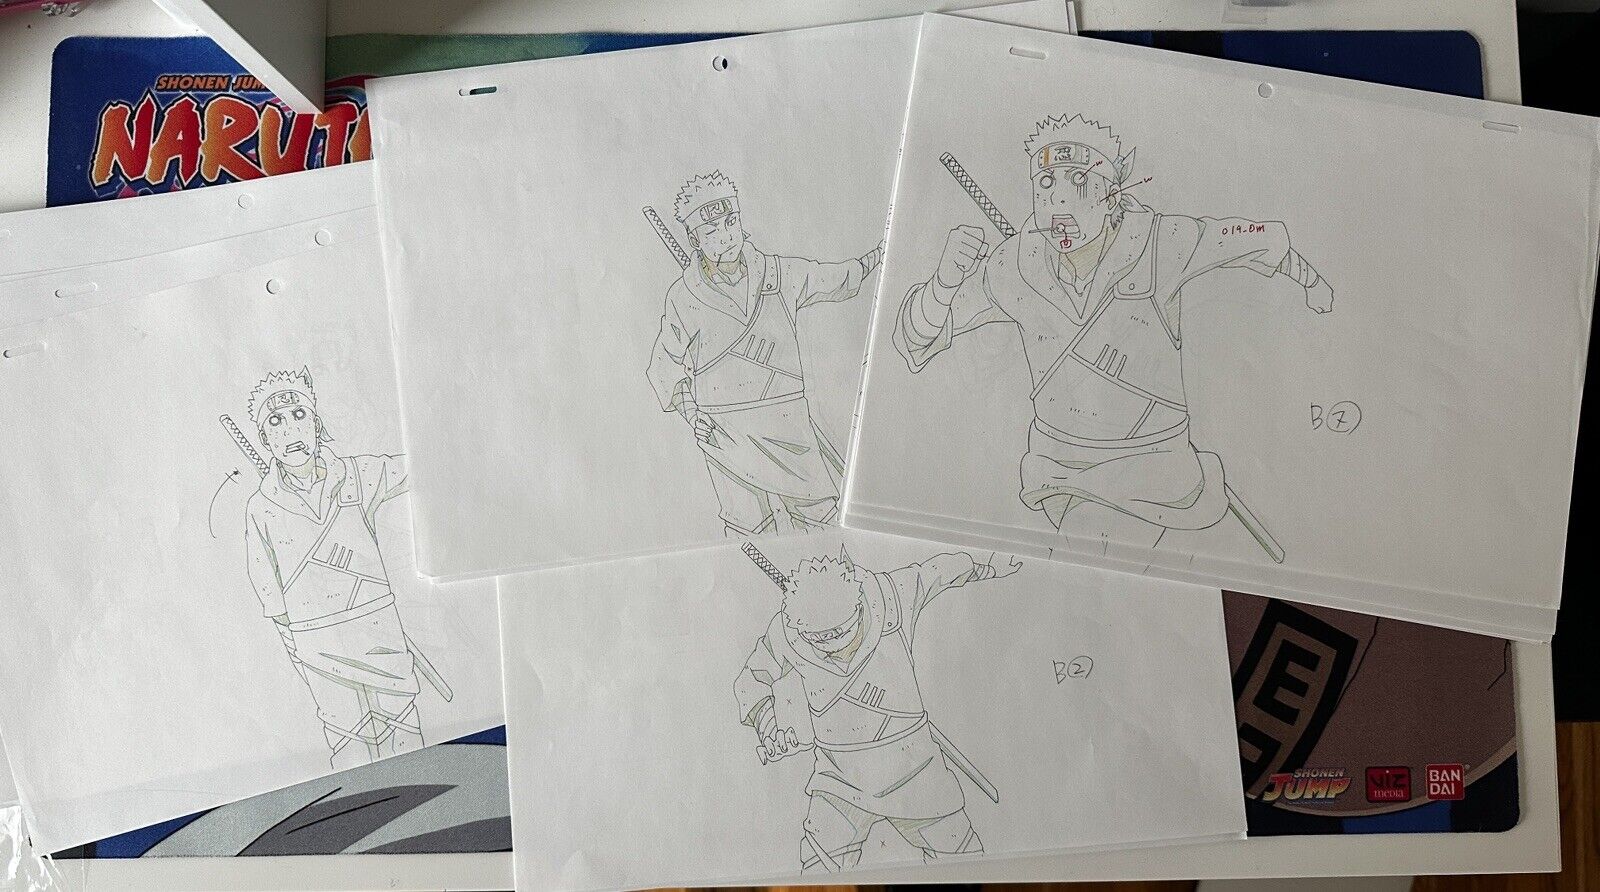 Naruto Shippuden Animation Art Gengas & dougas - 21 Total Sketches of Omoi